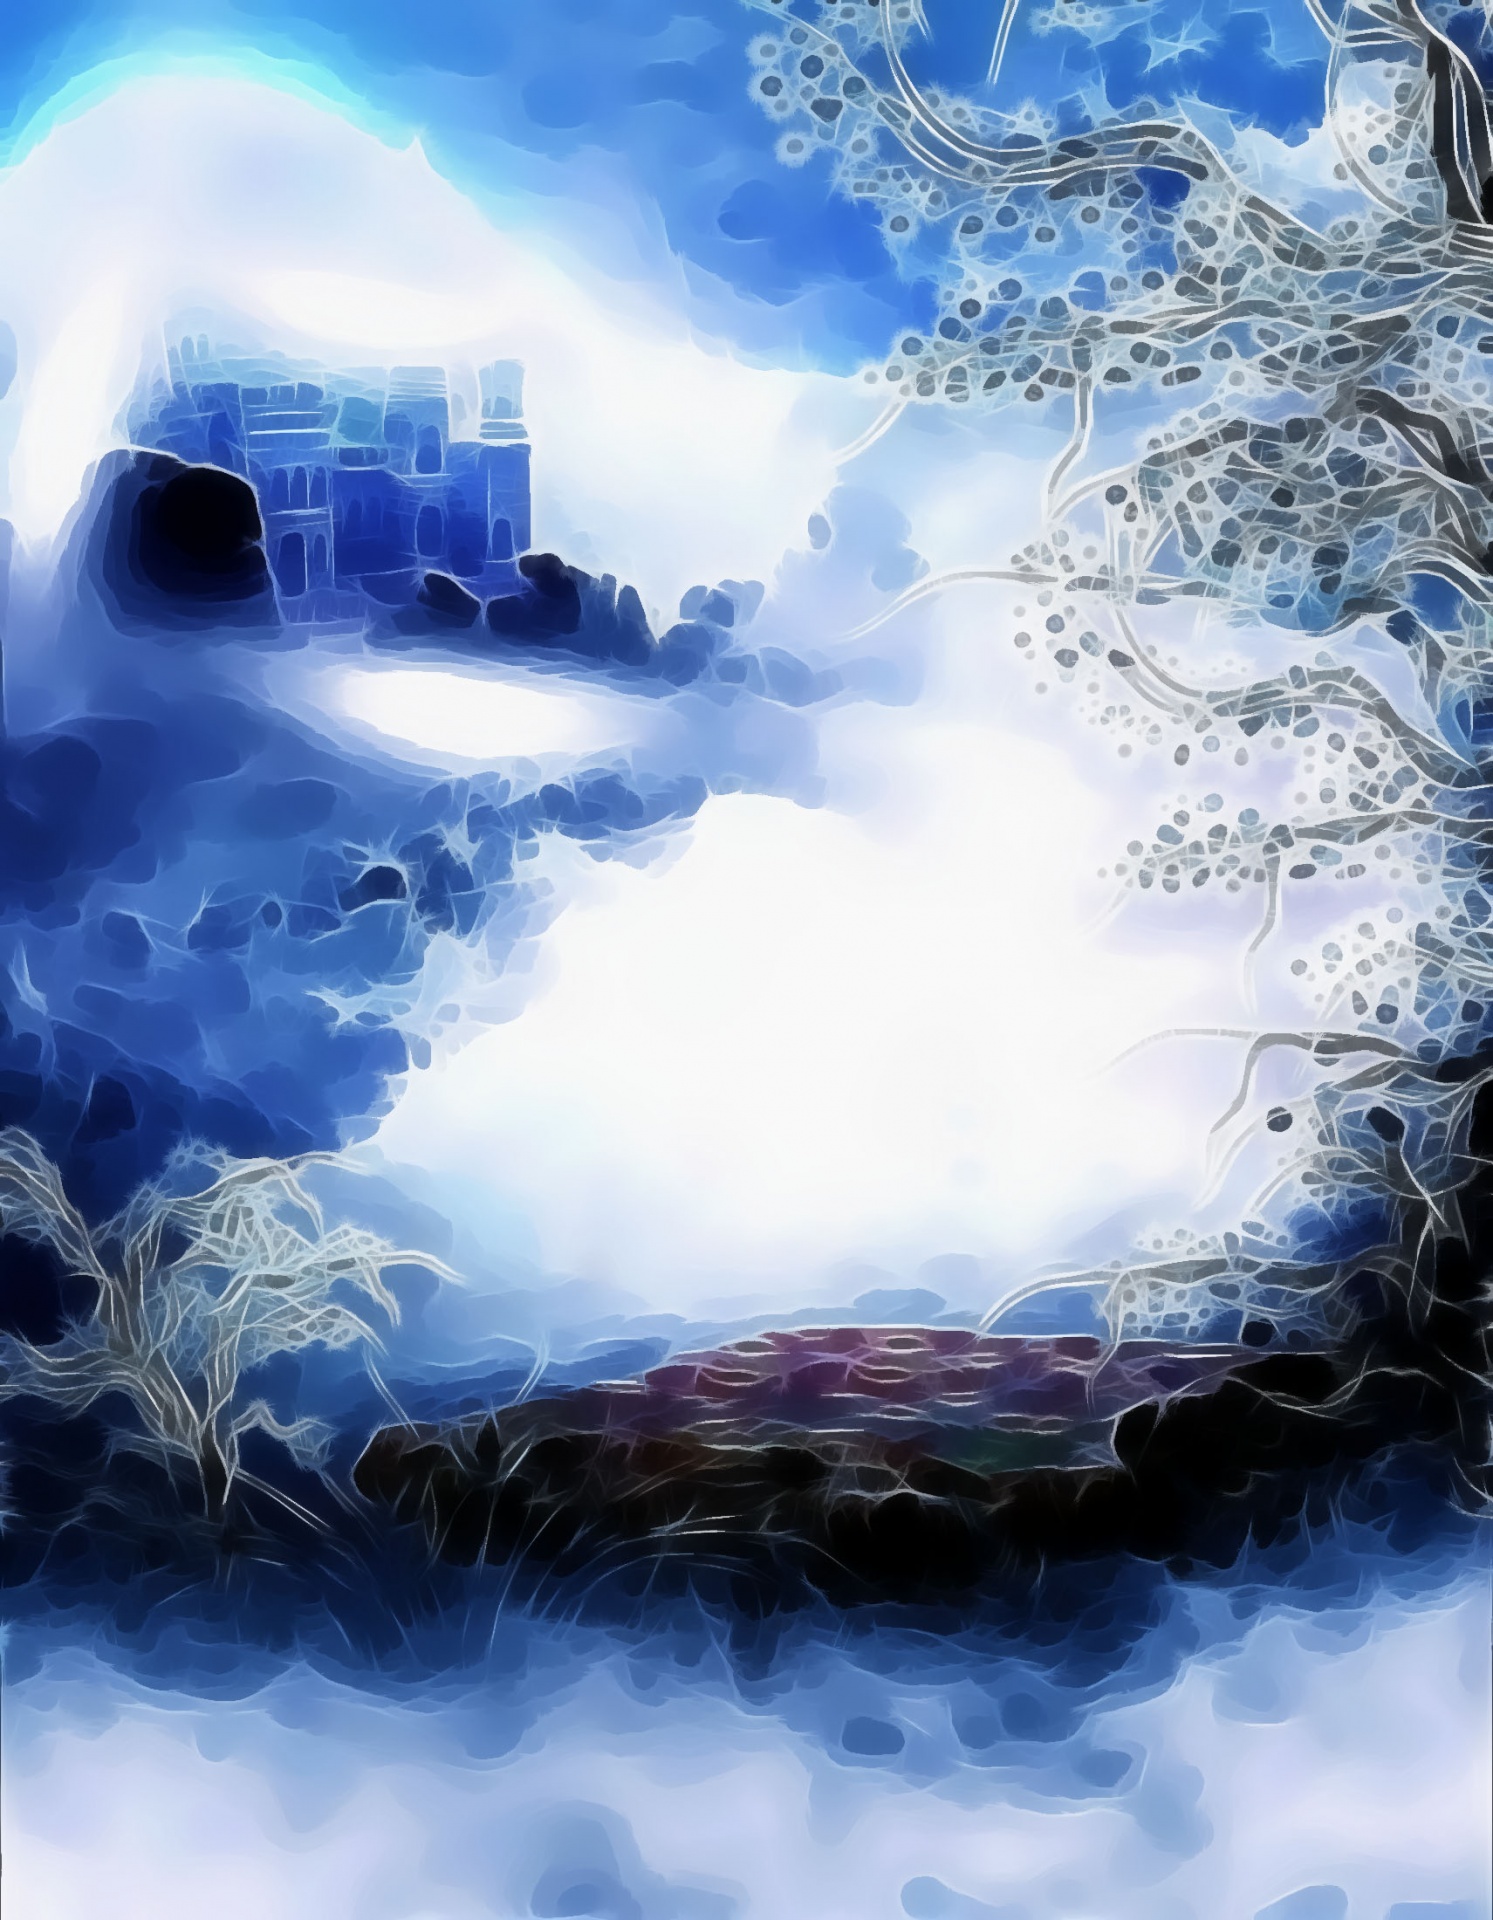 Cloud Castle Fantasy Sky Art Free Image From Needpix Com